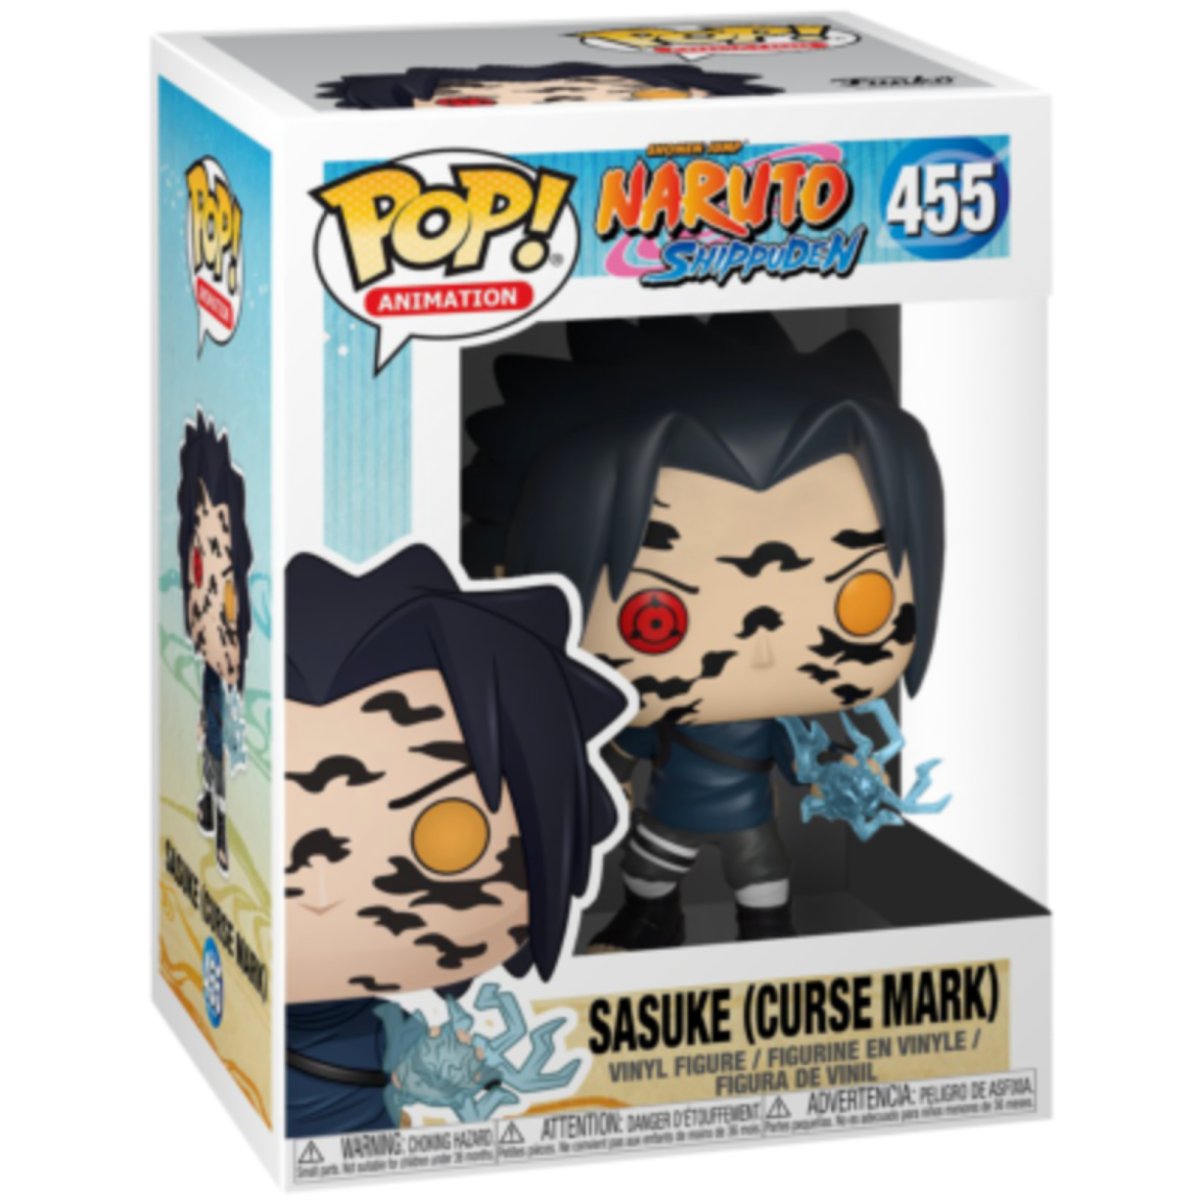 Naruto Shippuden - Sasuke (Curse Mark) #455 - Funko Pop! Vinyl Anime - Persona Toys